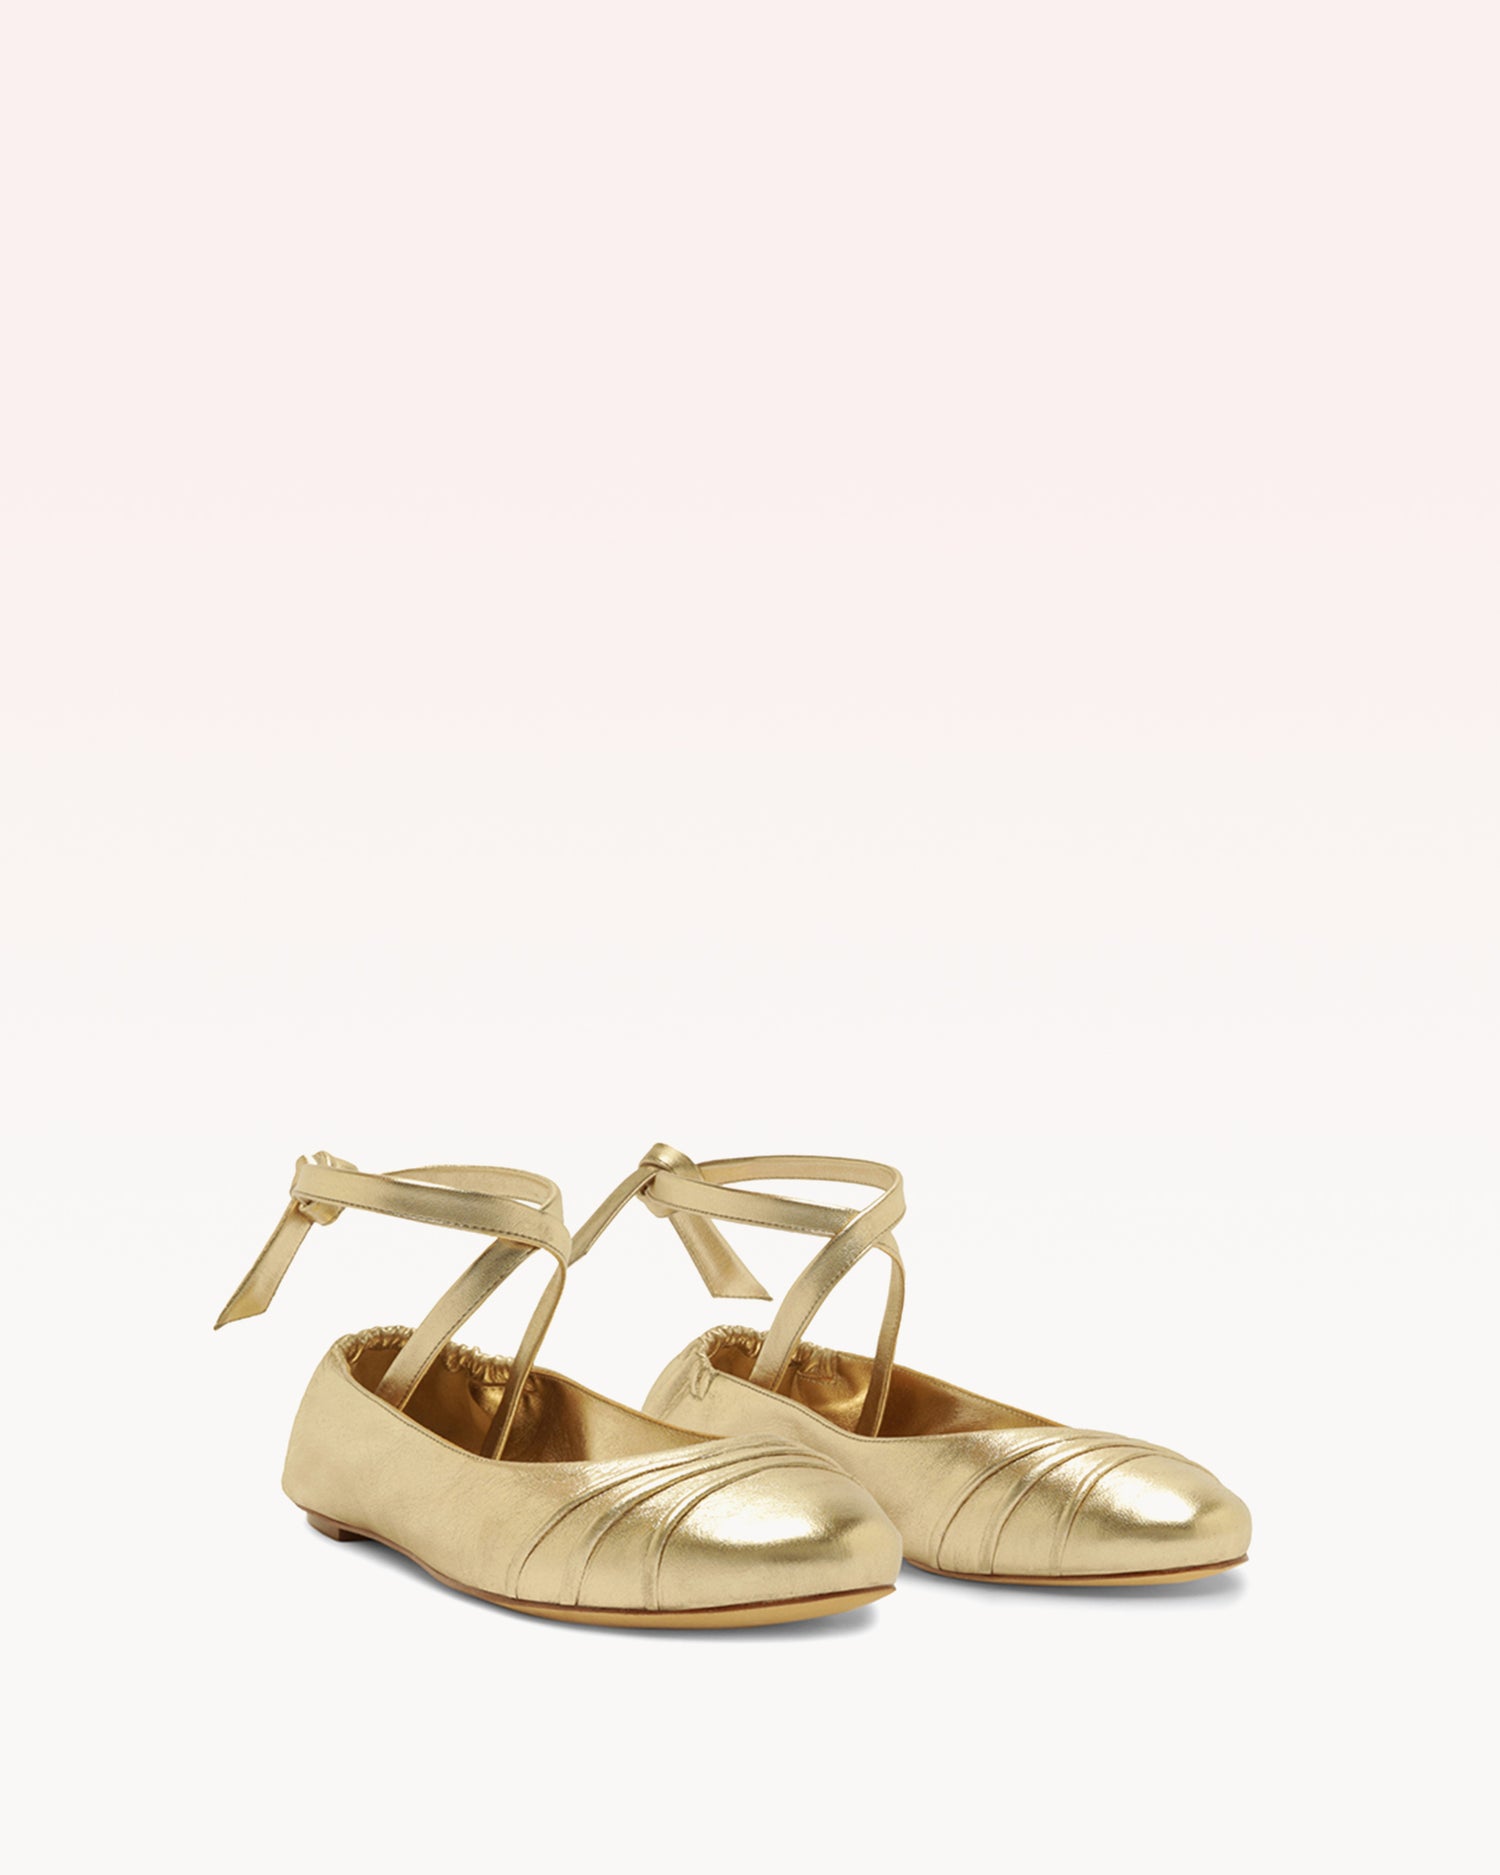 Clarita Ballet Flat Metallic Gold Sandals R/24   